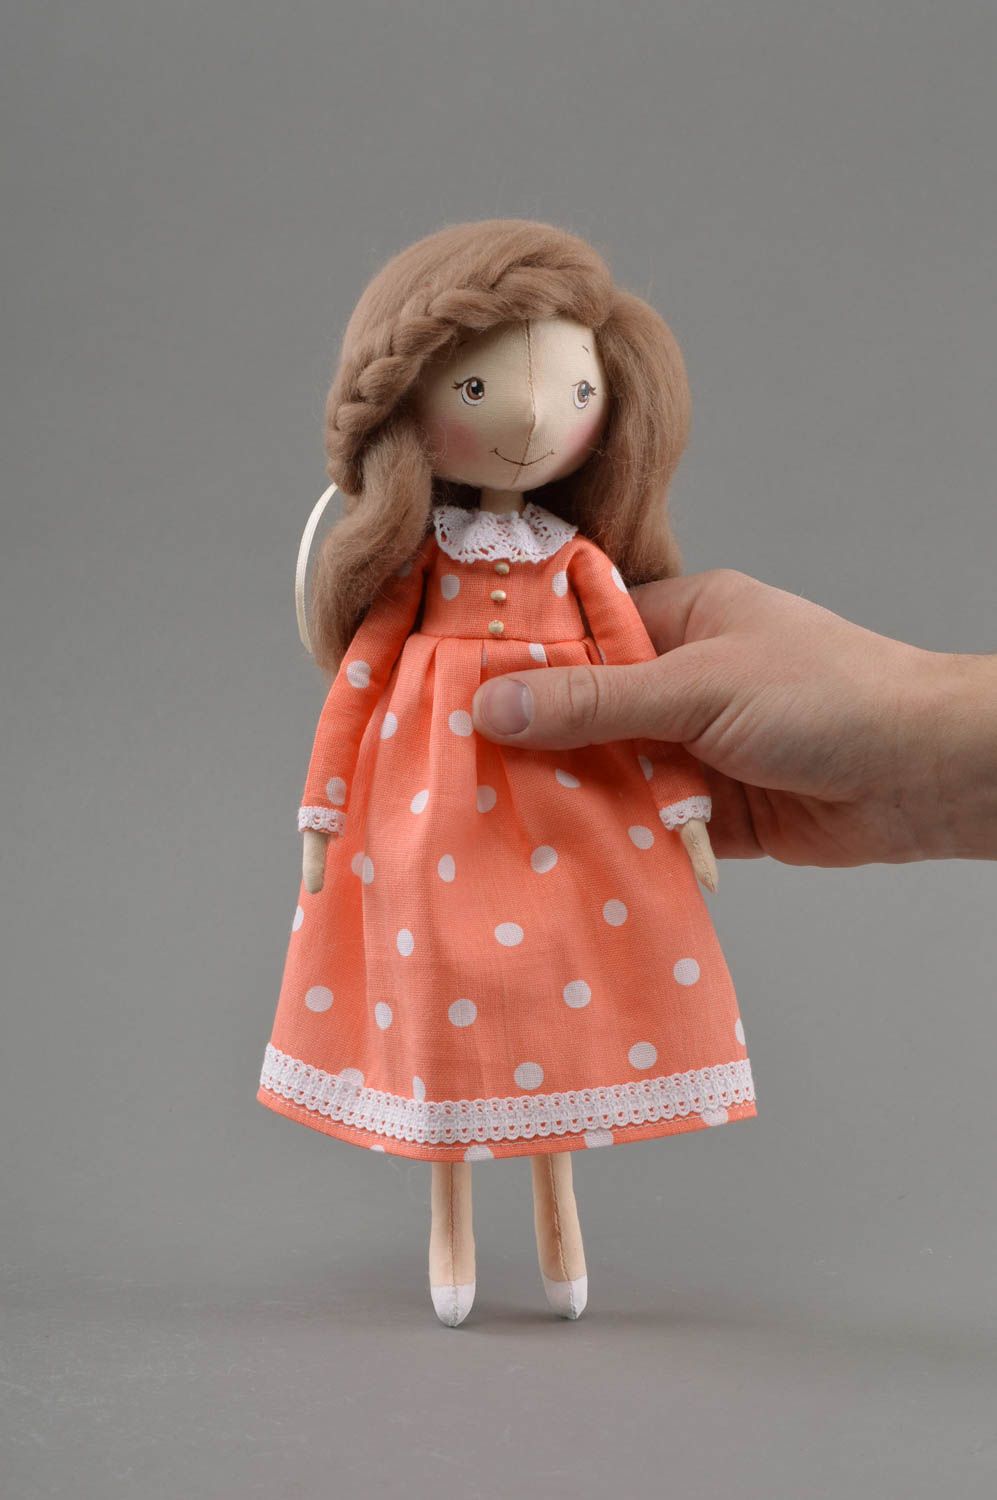 Handmade collectible doll interior toy nursery decor present for children photo 4